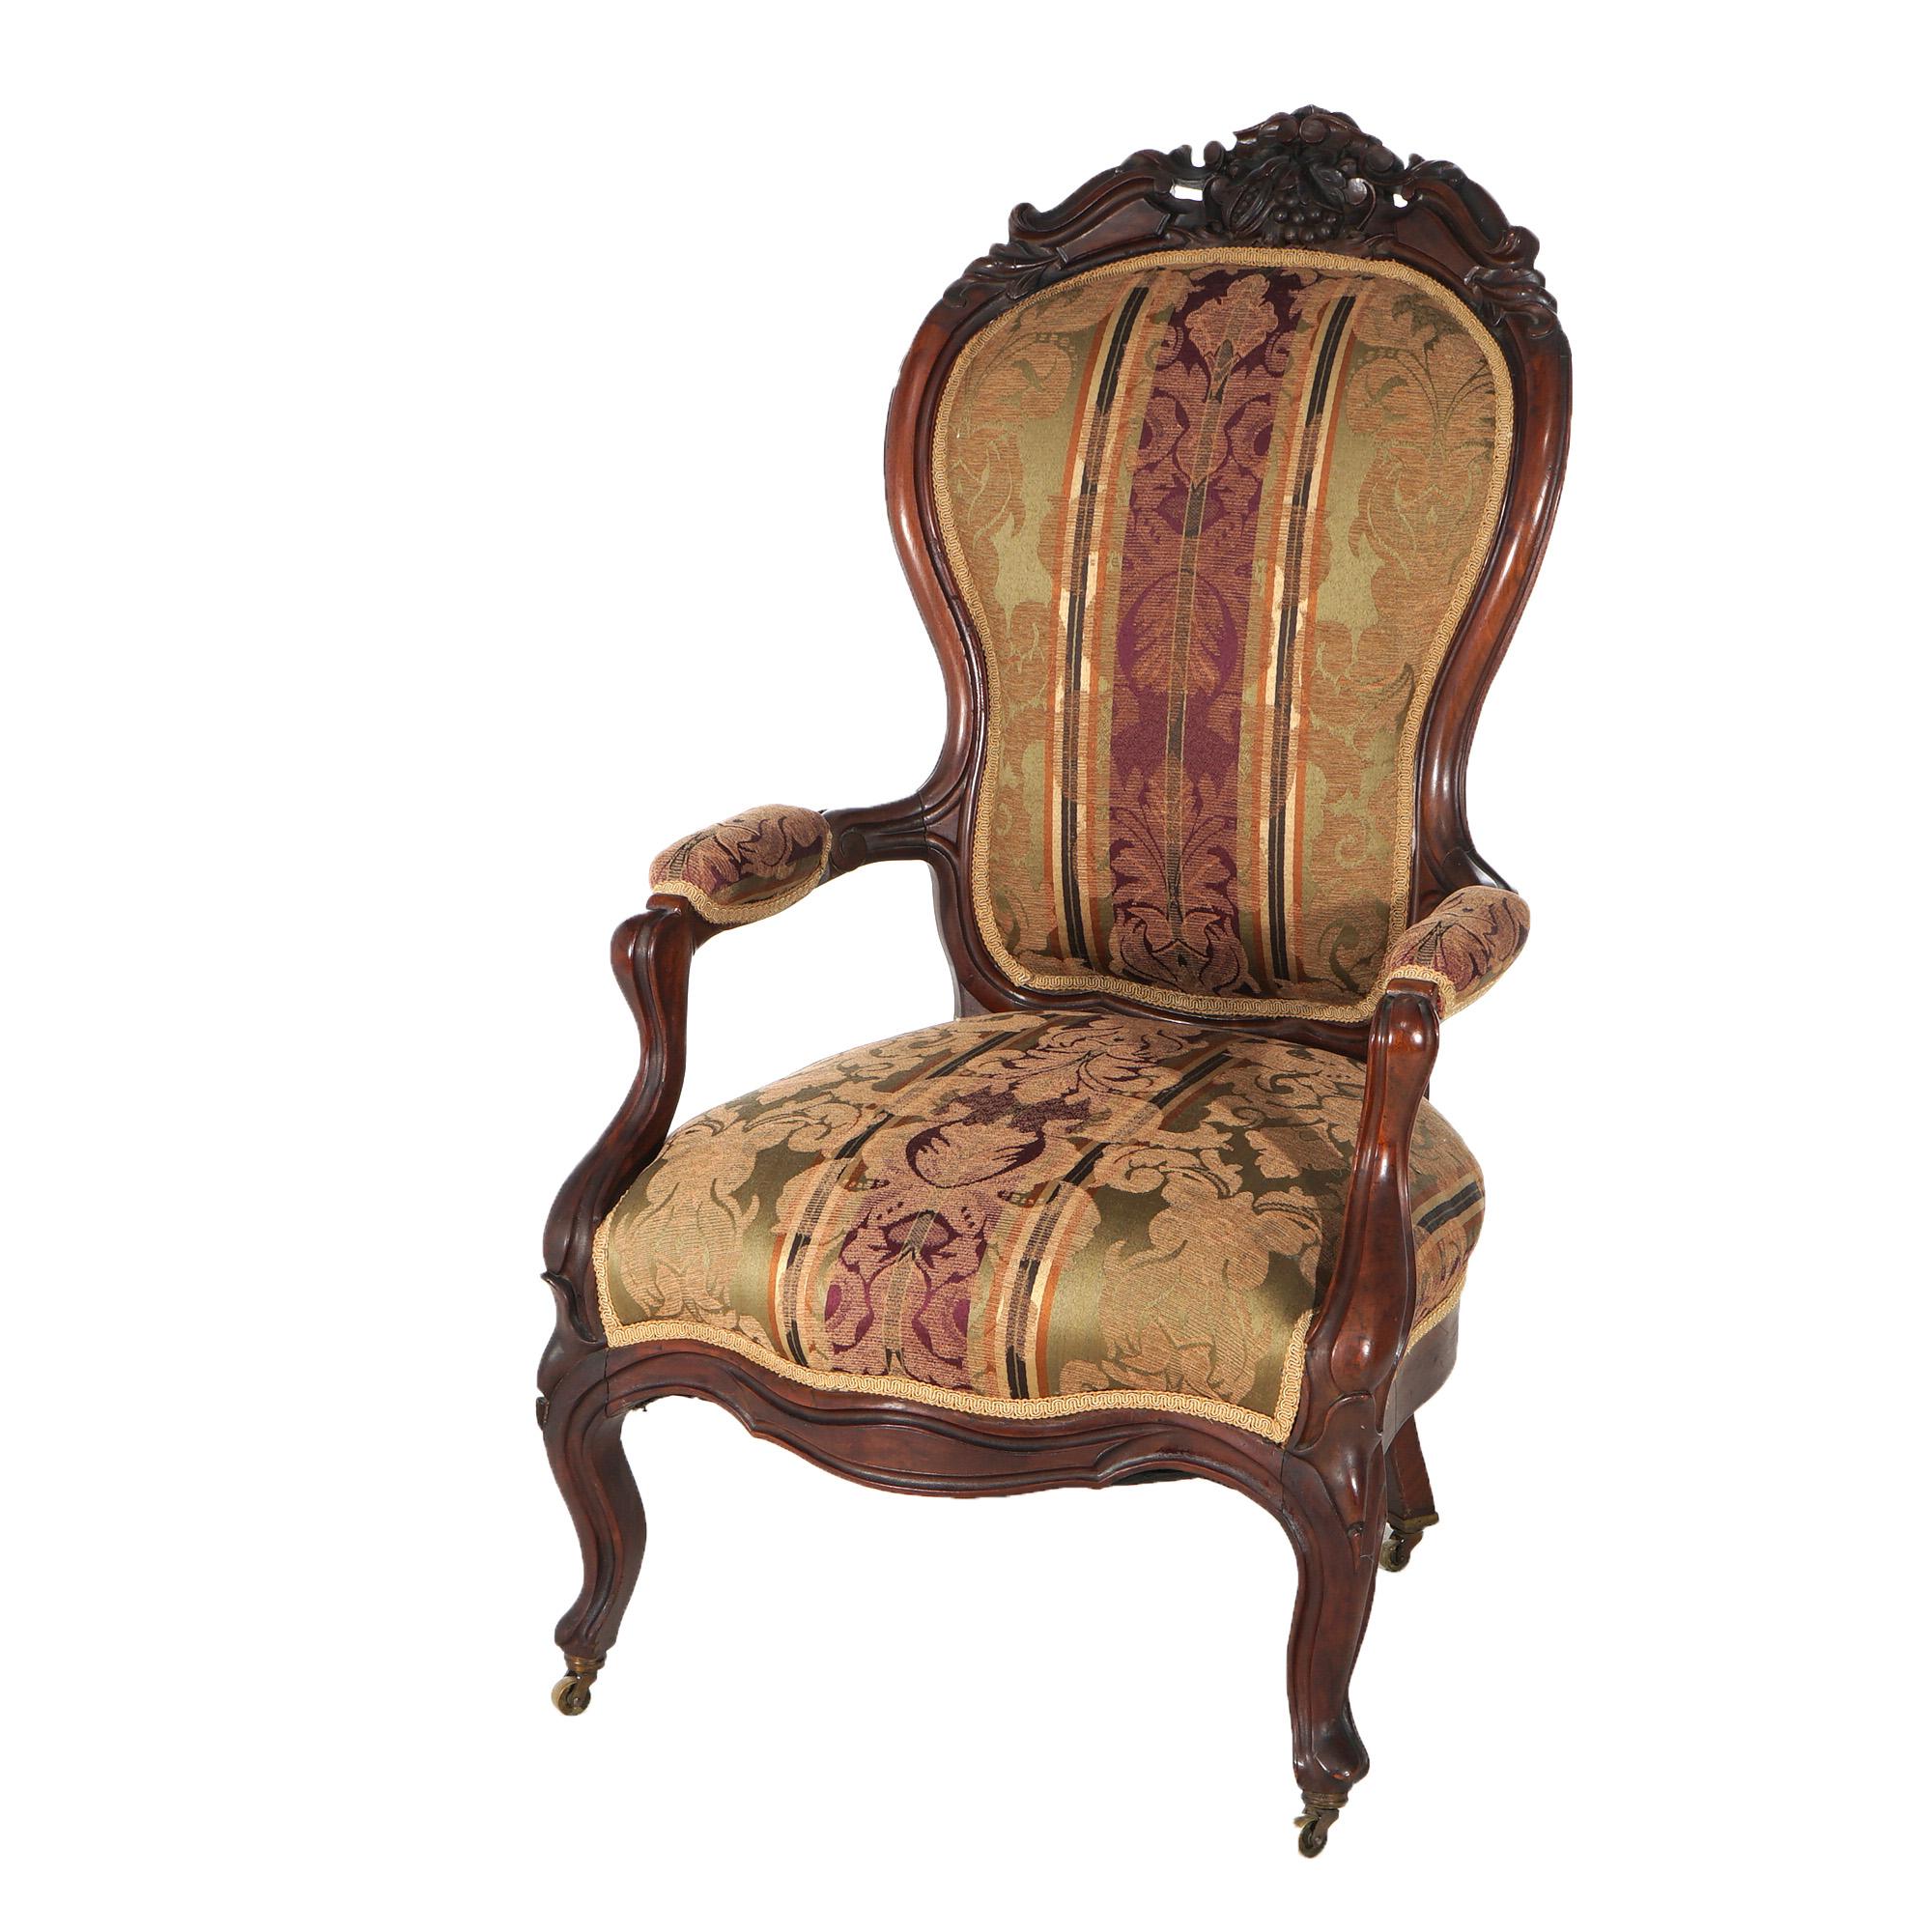 Renaissance Revival Antique Victorian Carved Walnut Upholstered Gentleman’s Chair C1890 For Sale